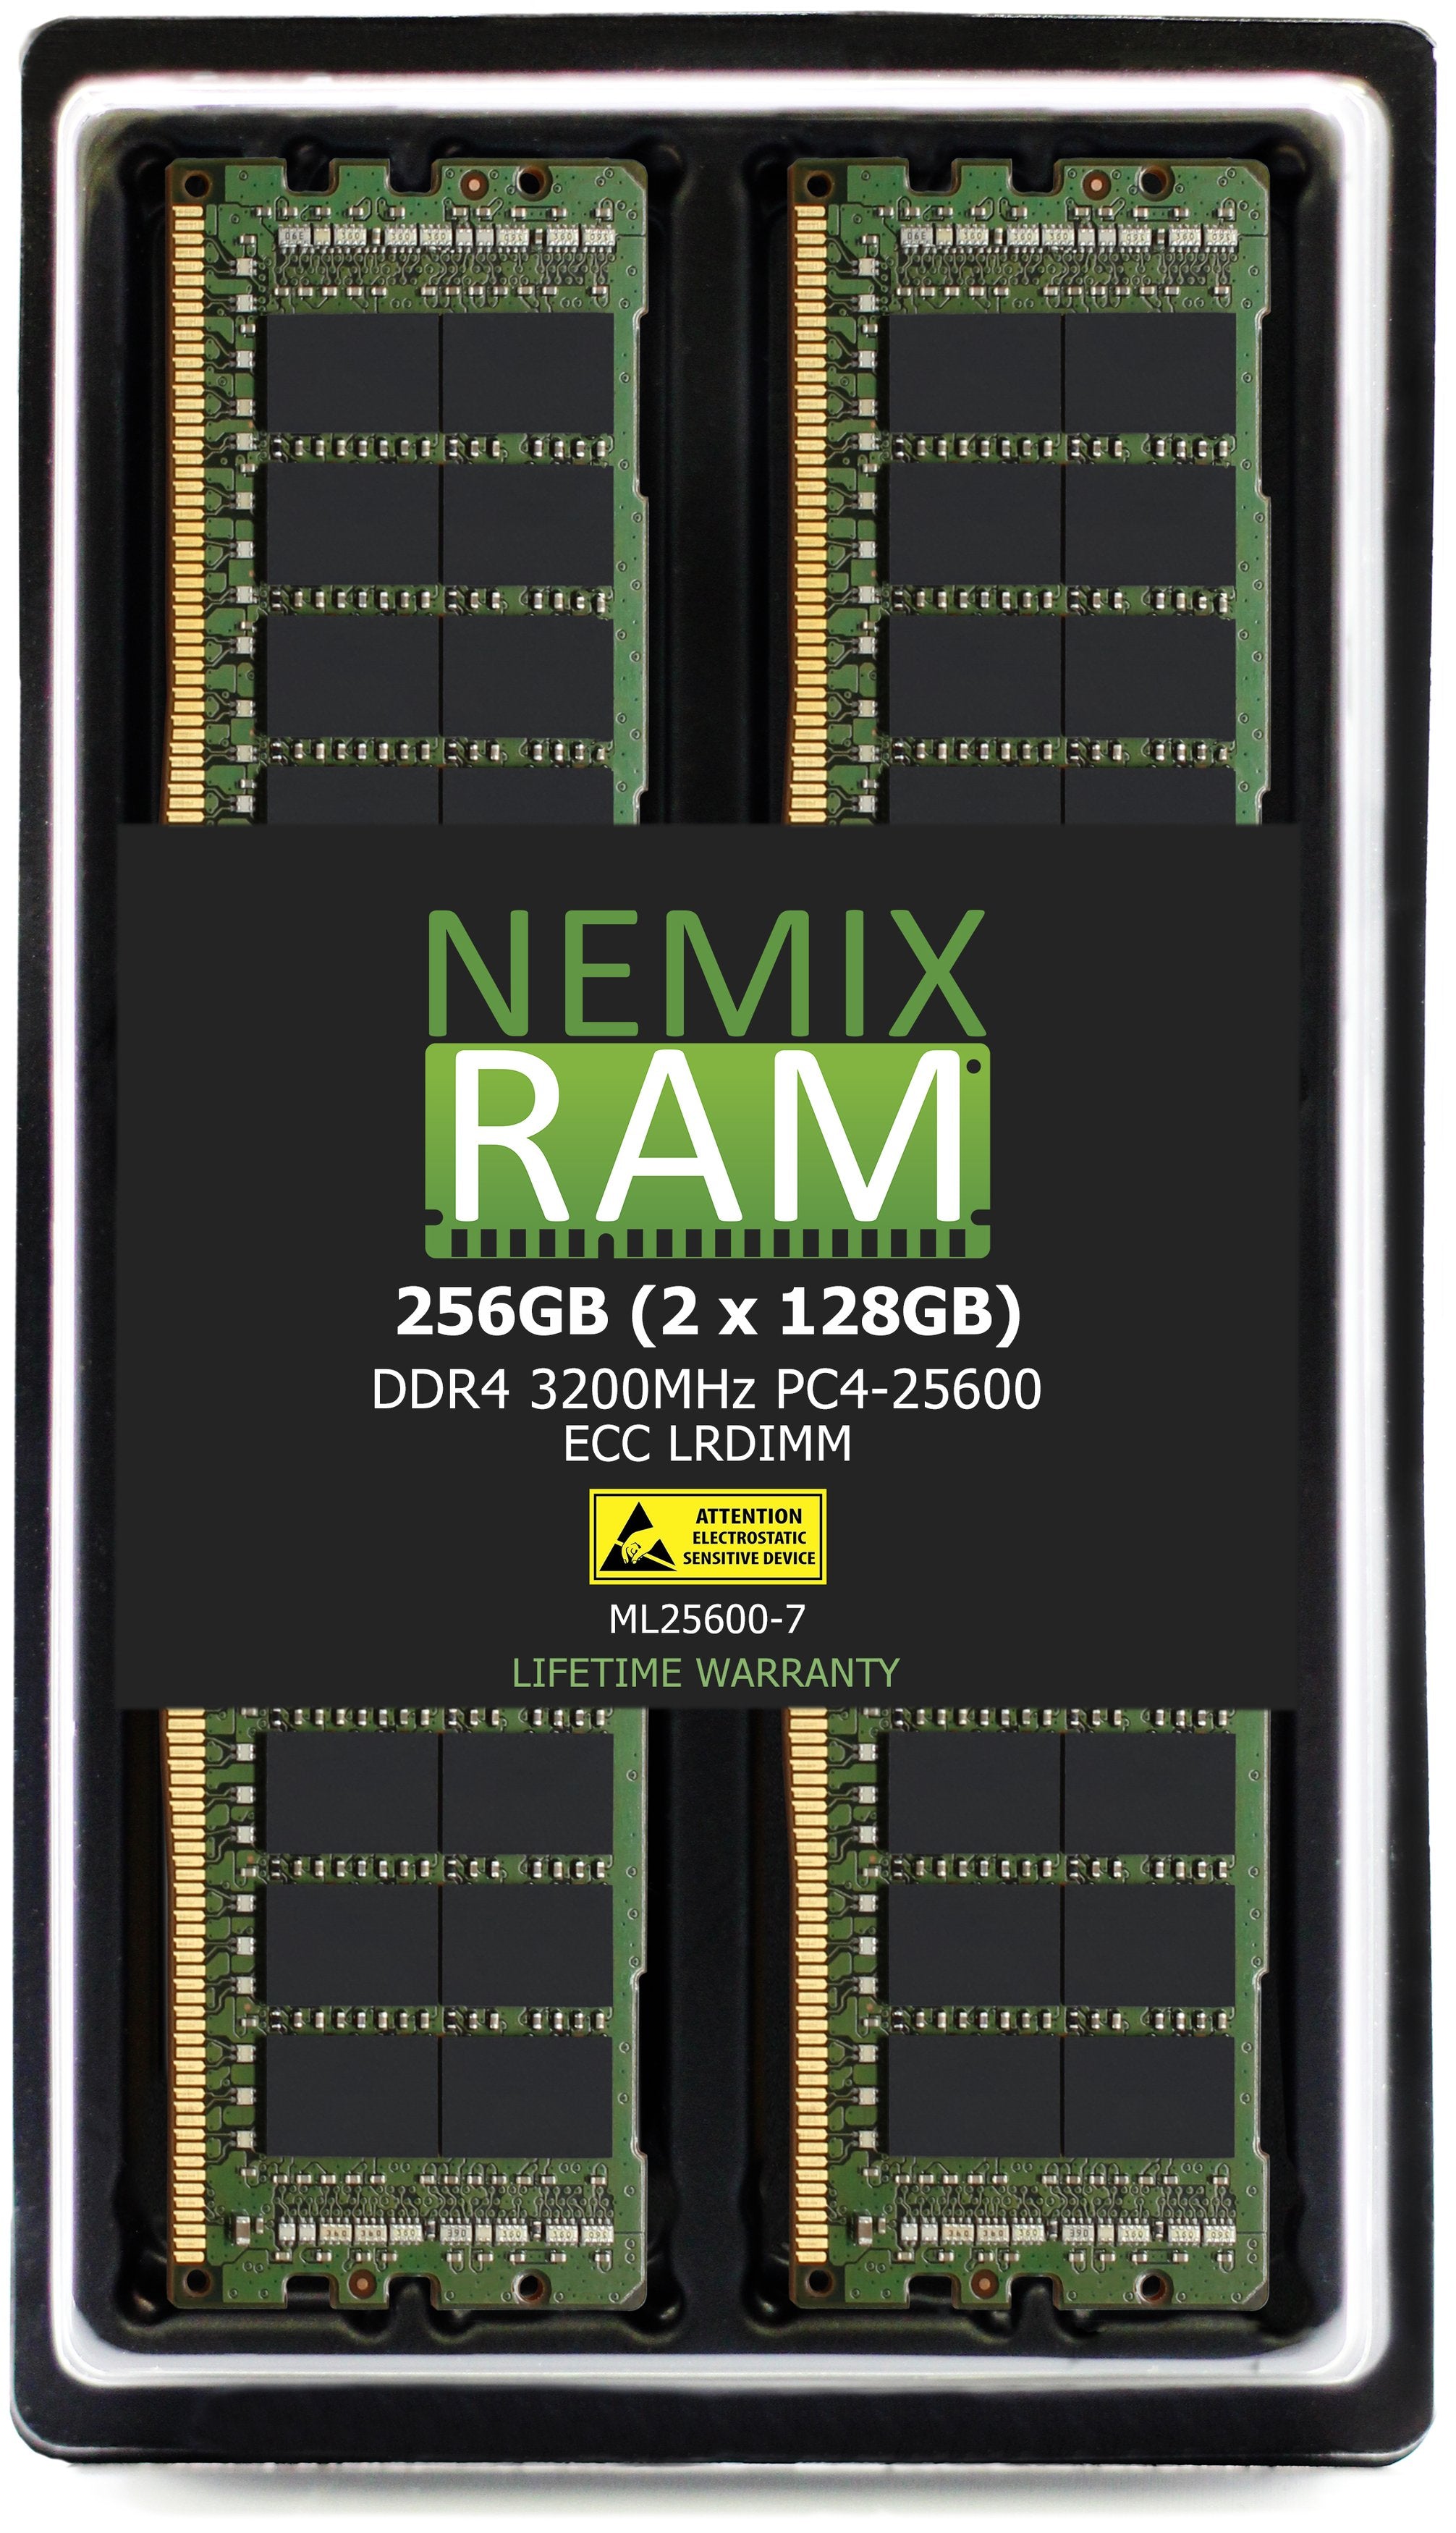 DDR4 3200MHZ PC4-25600 LRDIMM 8RX4